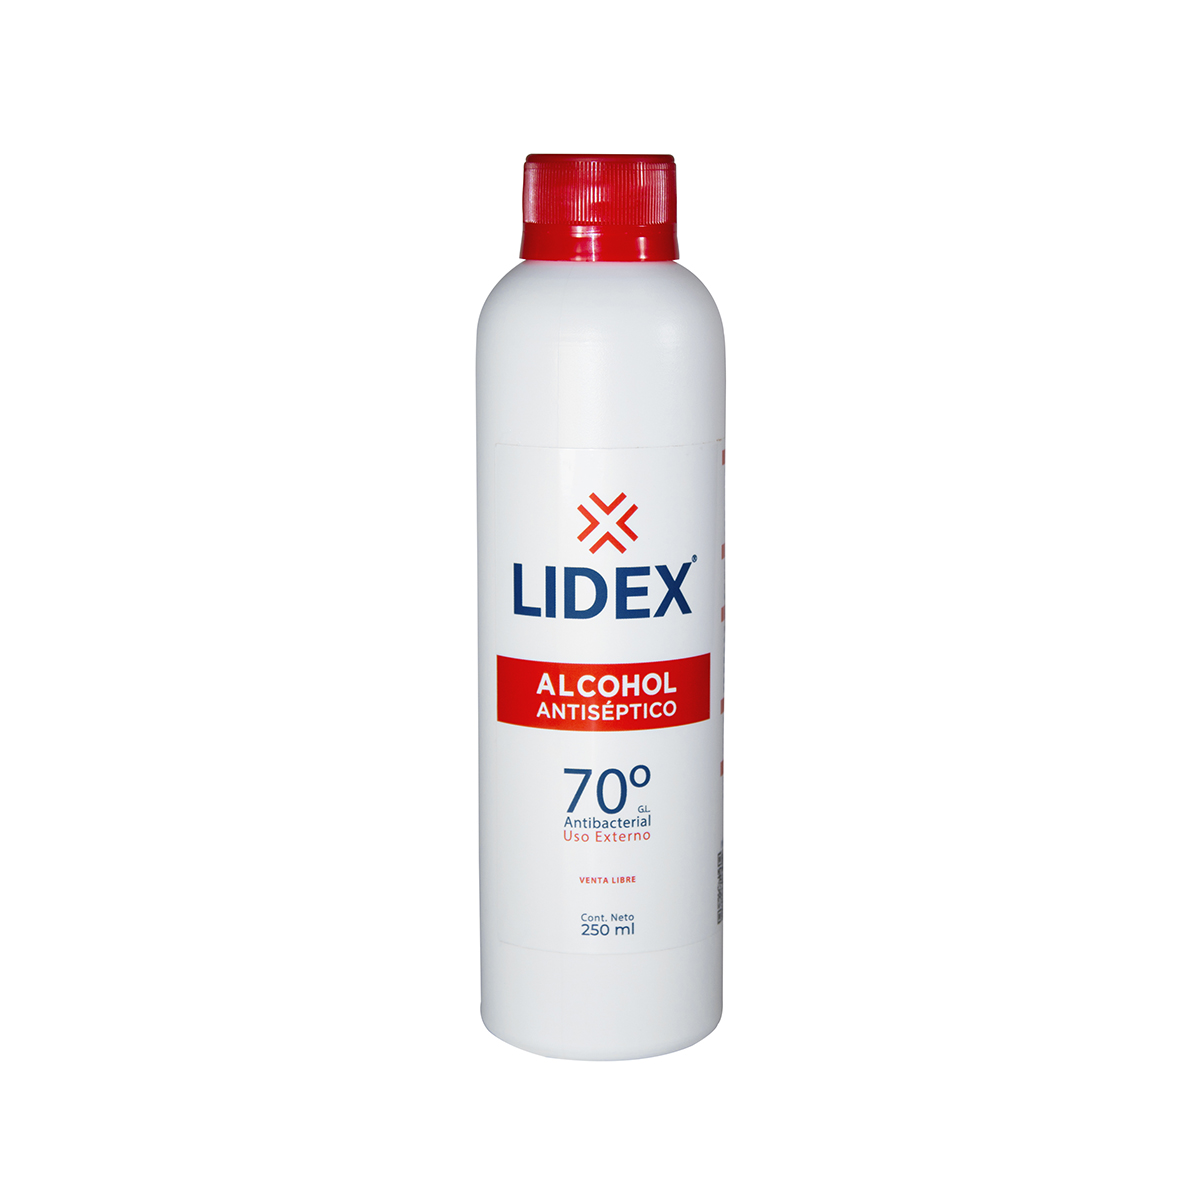 Lidex 250ml